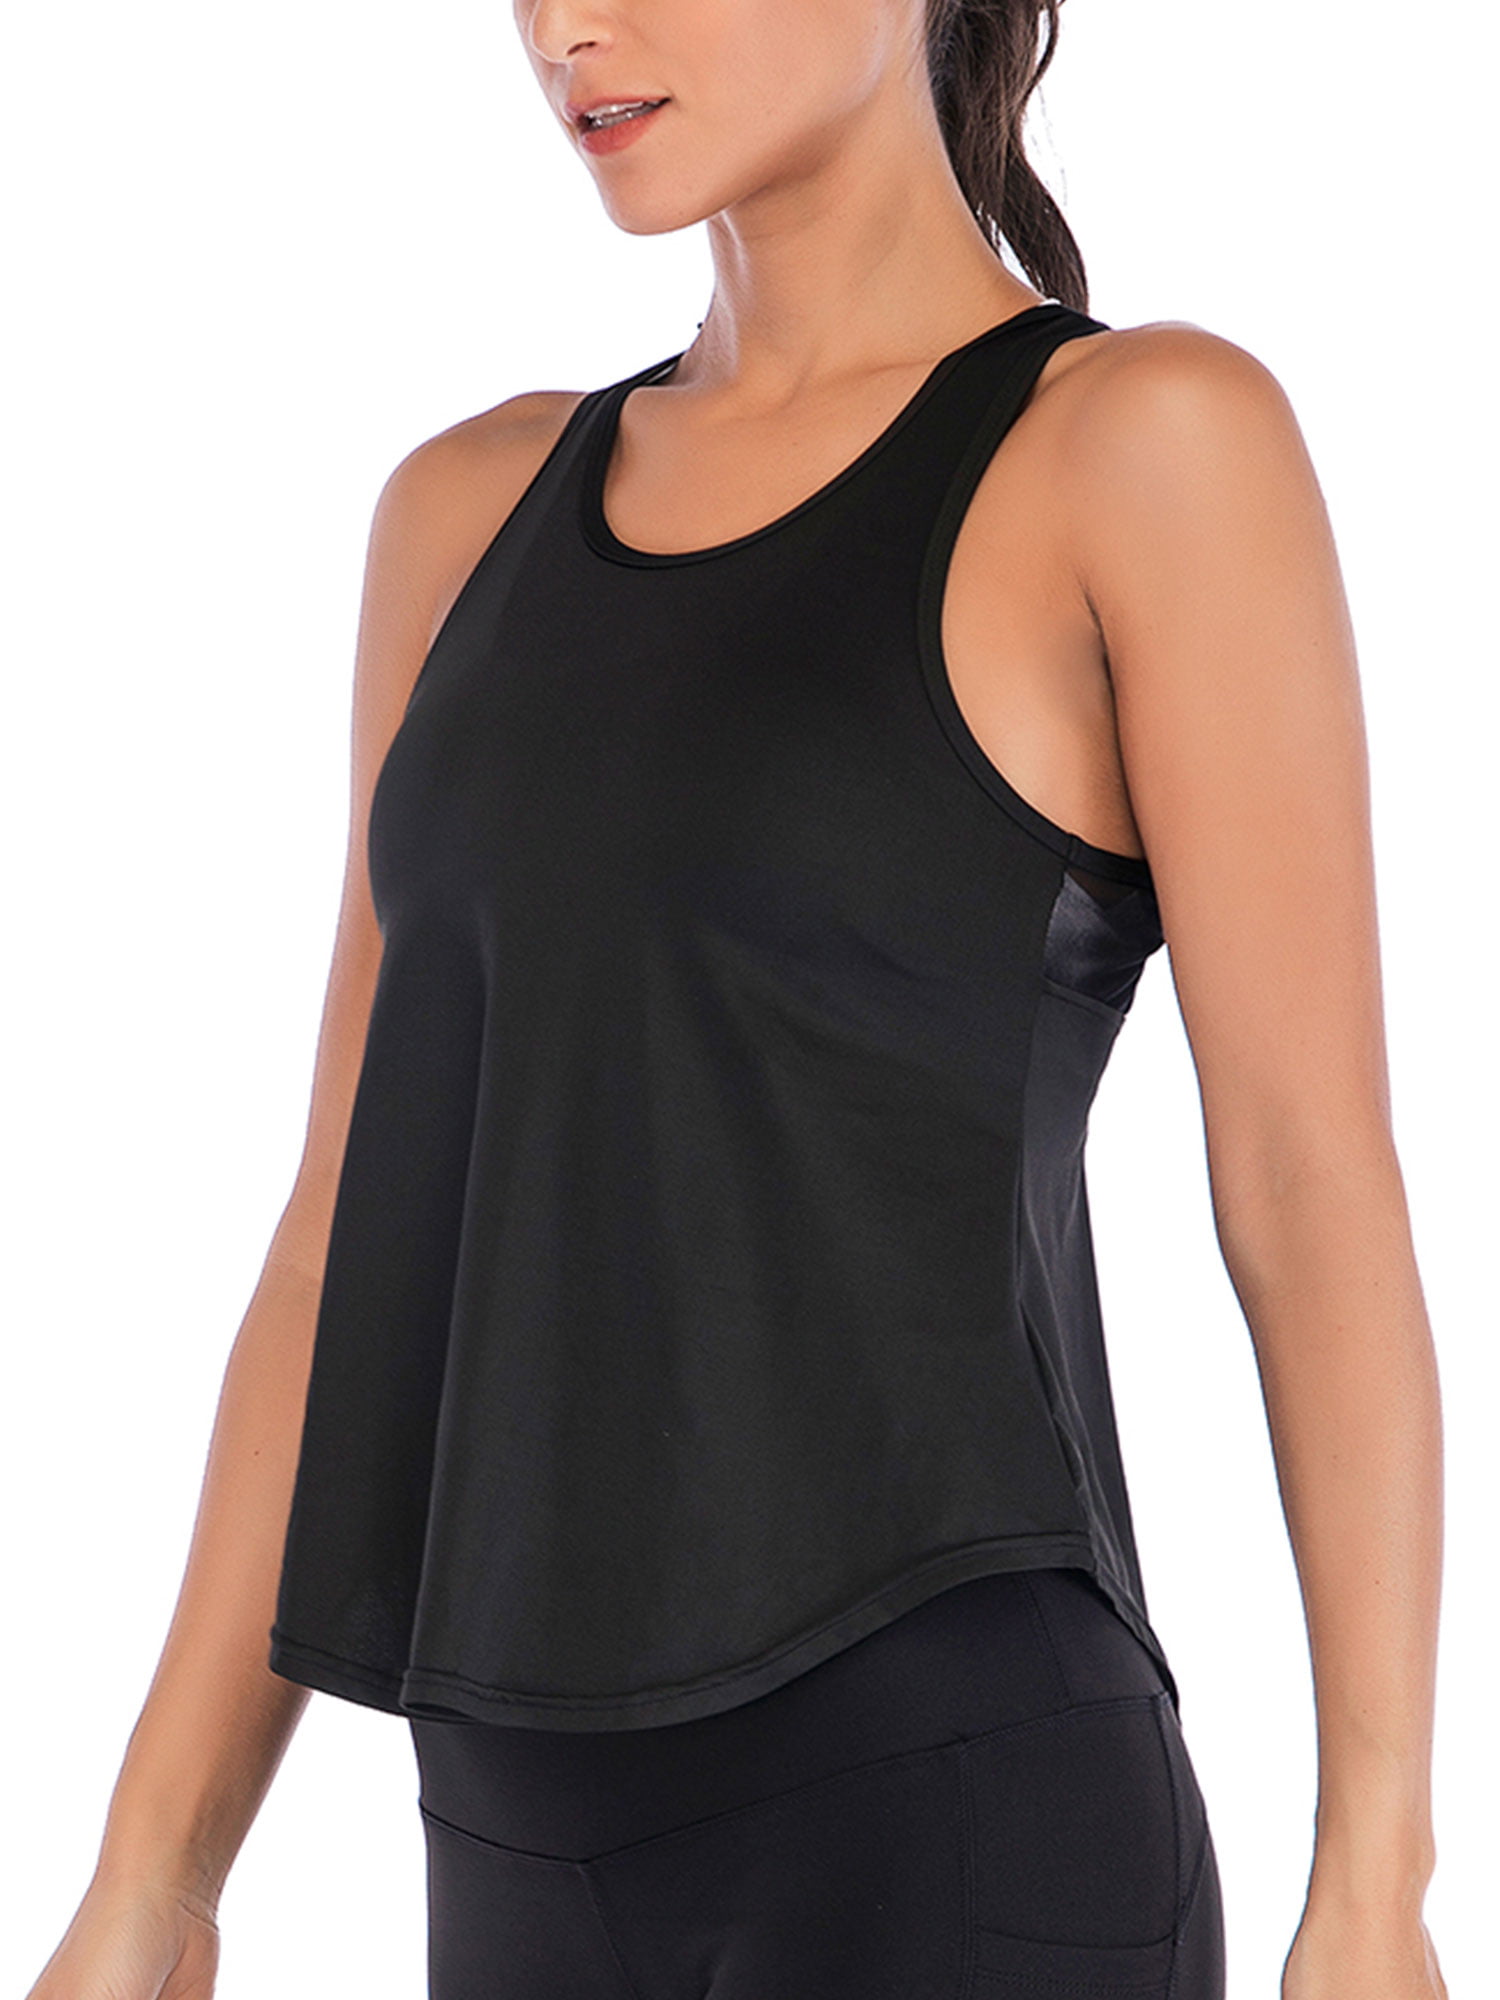 Women Vest Workout Tank Top T-shirt Sport Gym Clothes Fitness Yoga Tank Shirt US 